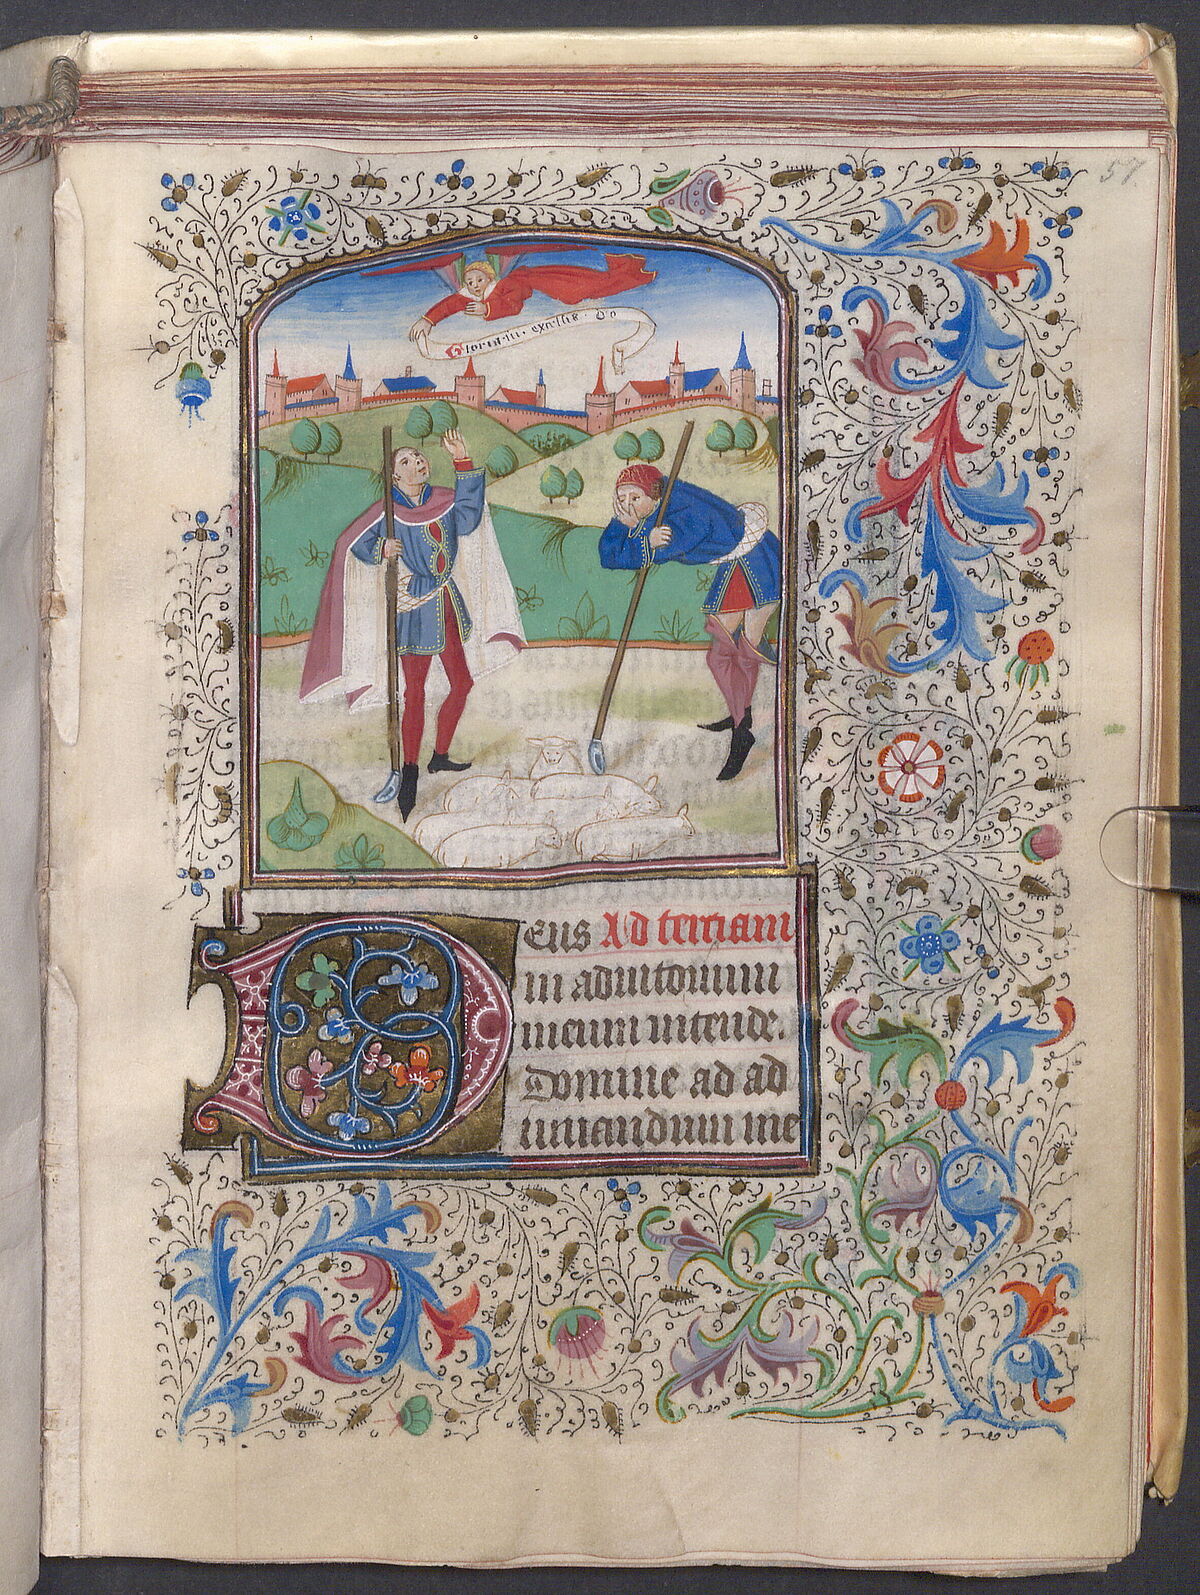 Aufwendig geschmücktes Stundenbuch aus dem 15./16. Jahrhundert